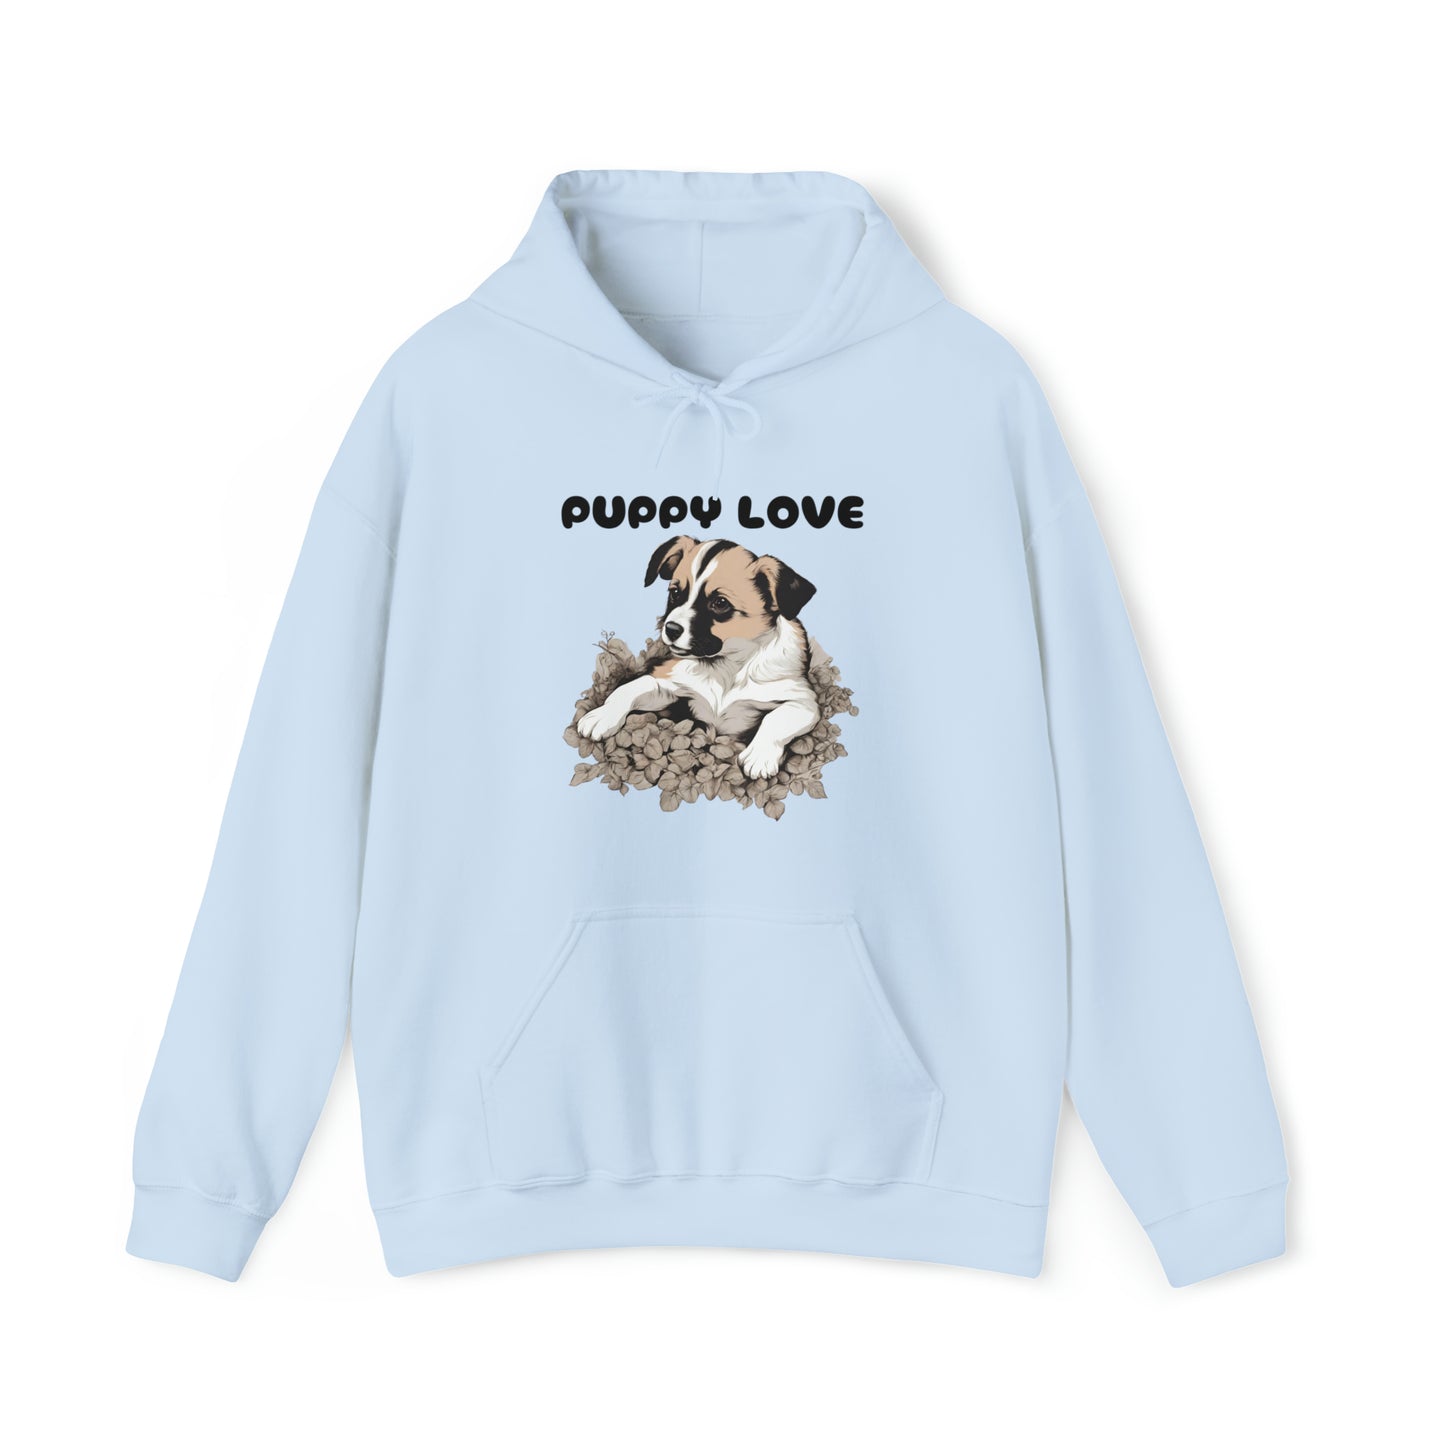 Puppy print dog lovers hooded sweatshirt gift